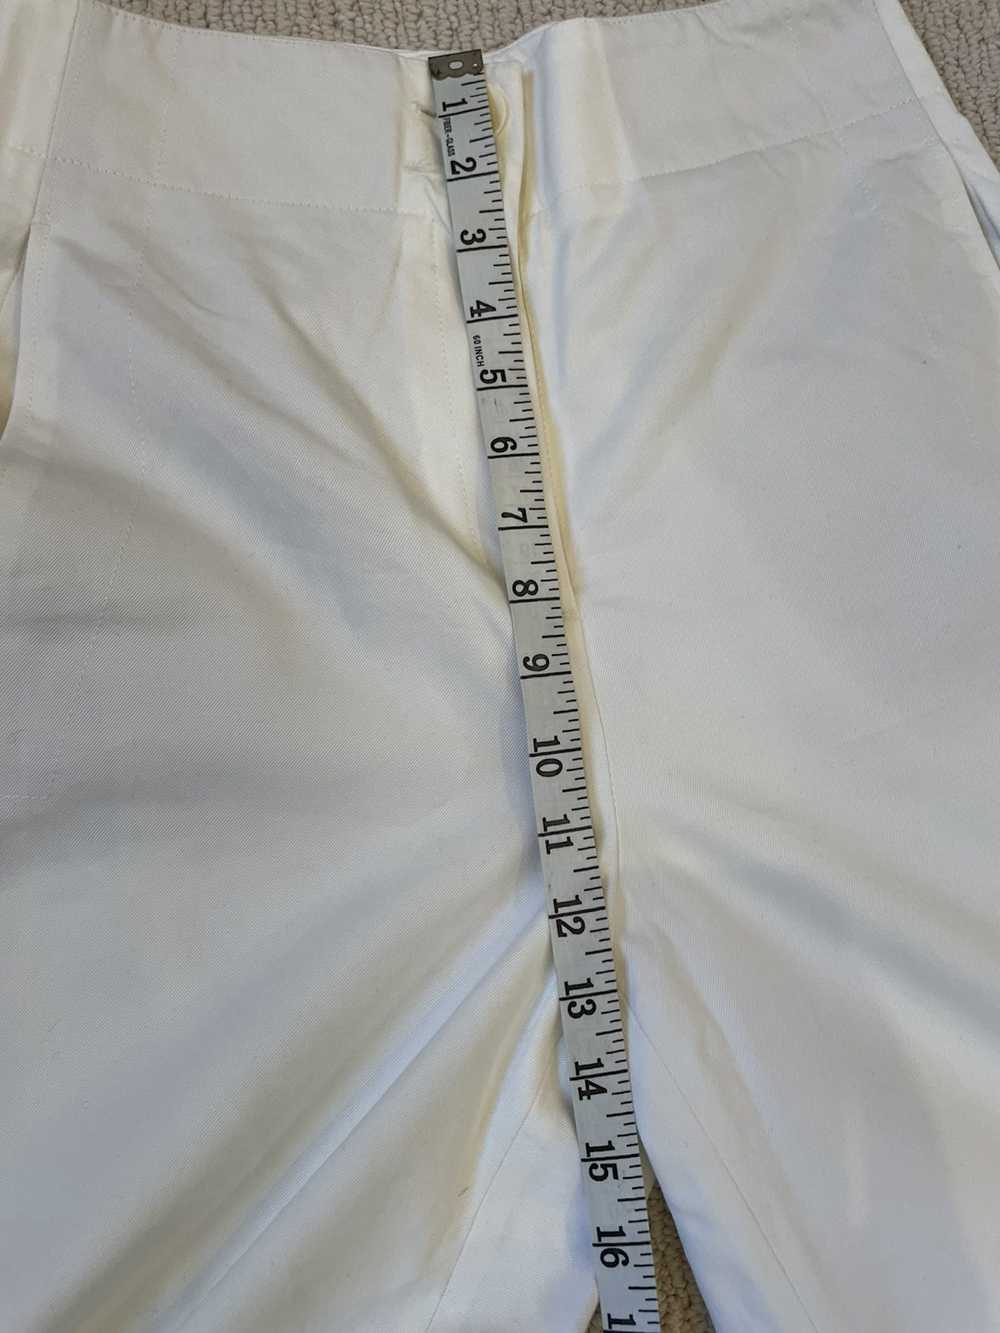 Massimo Dutti Uterque brand pants - image 9